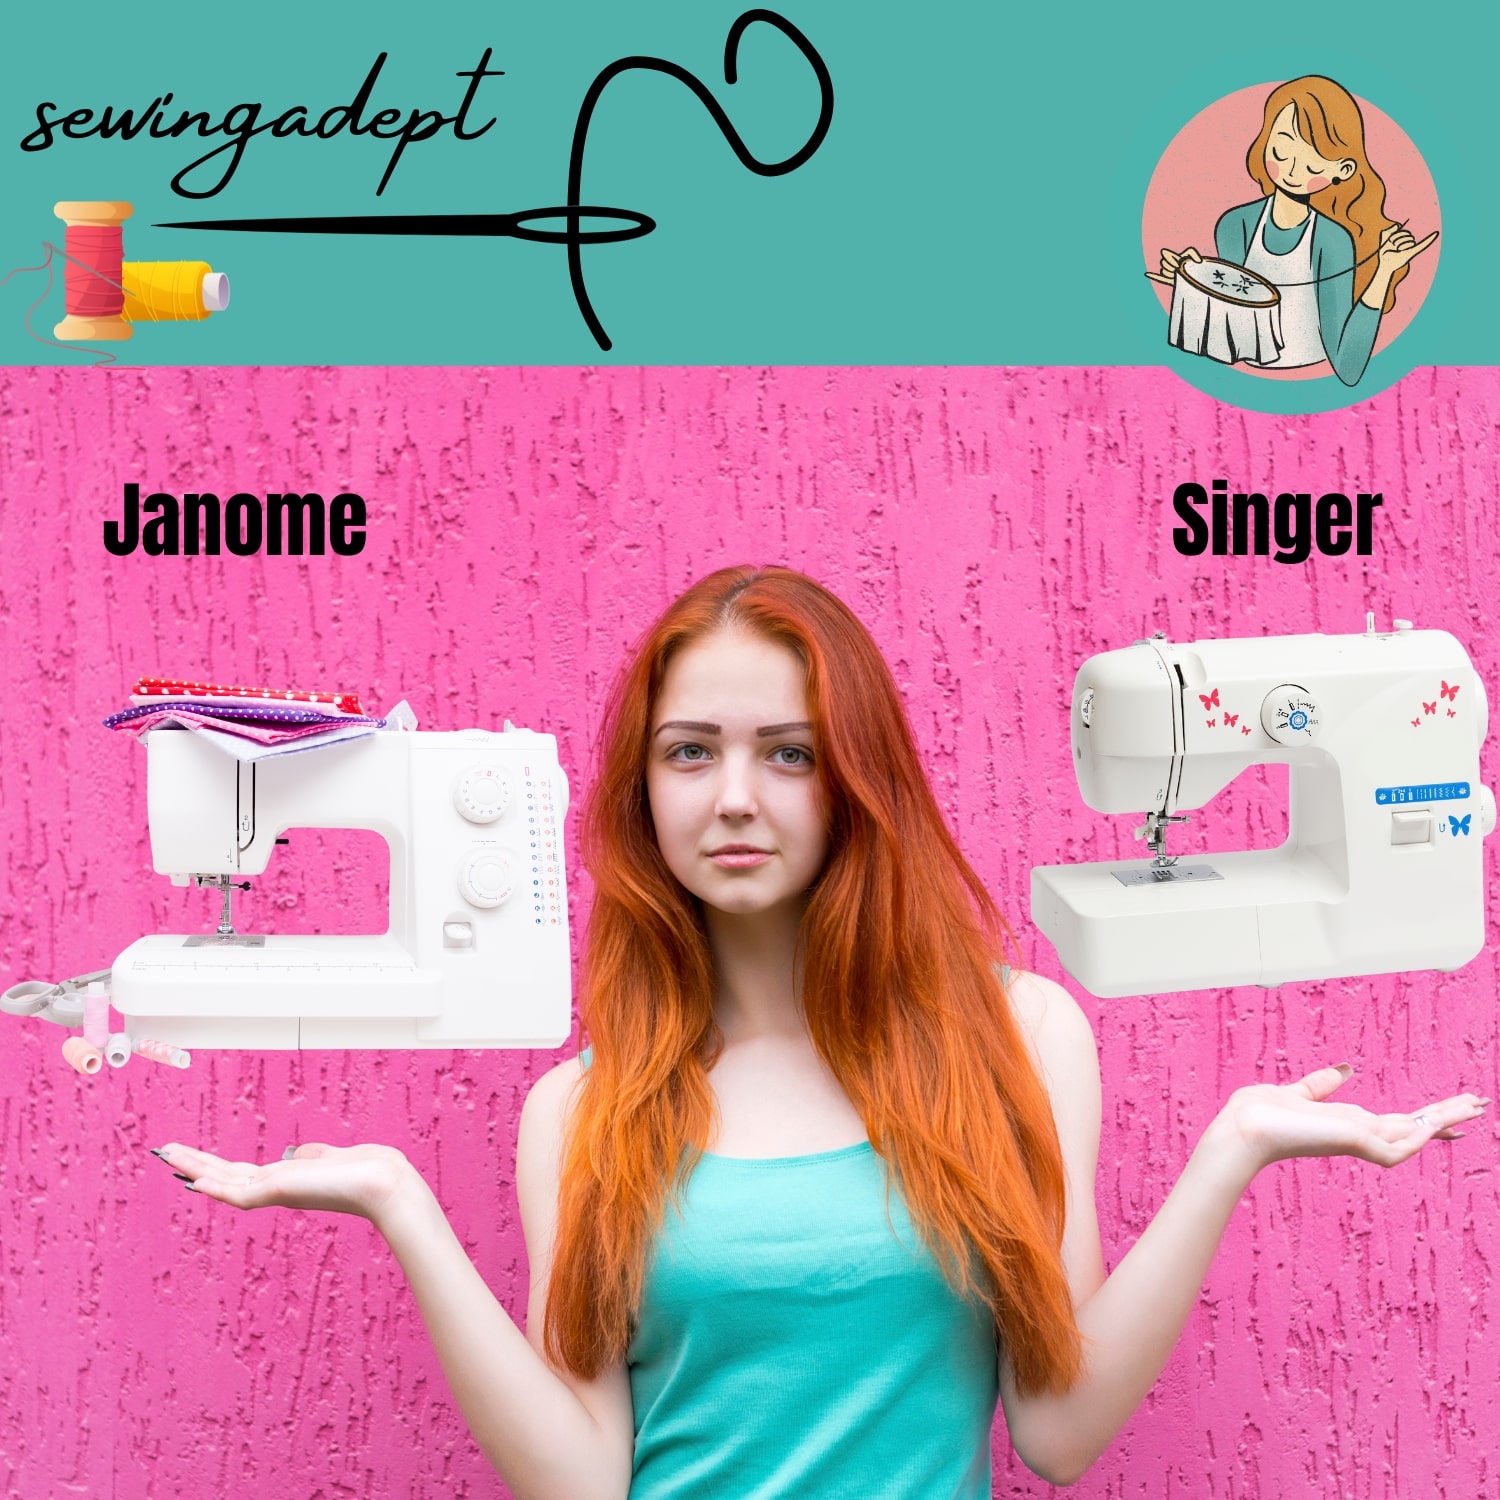 Janome vs Singer: comparing unique features in crafting